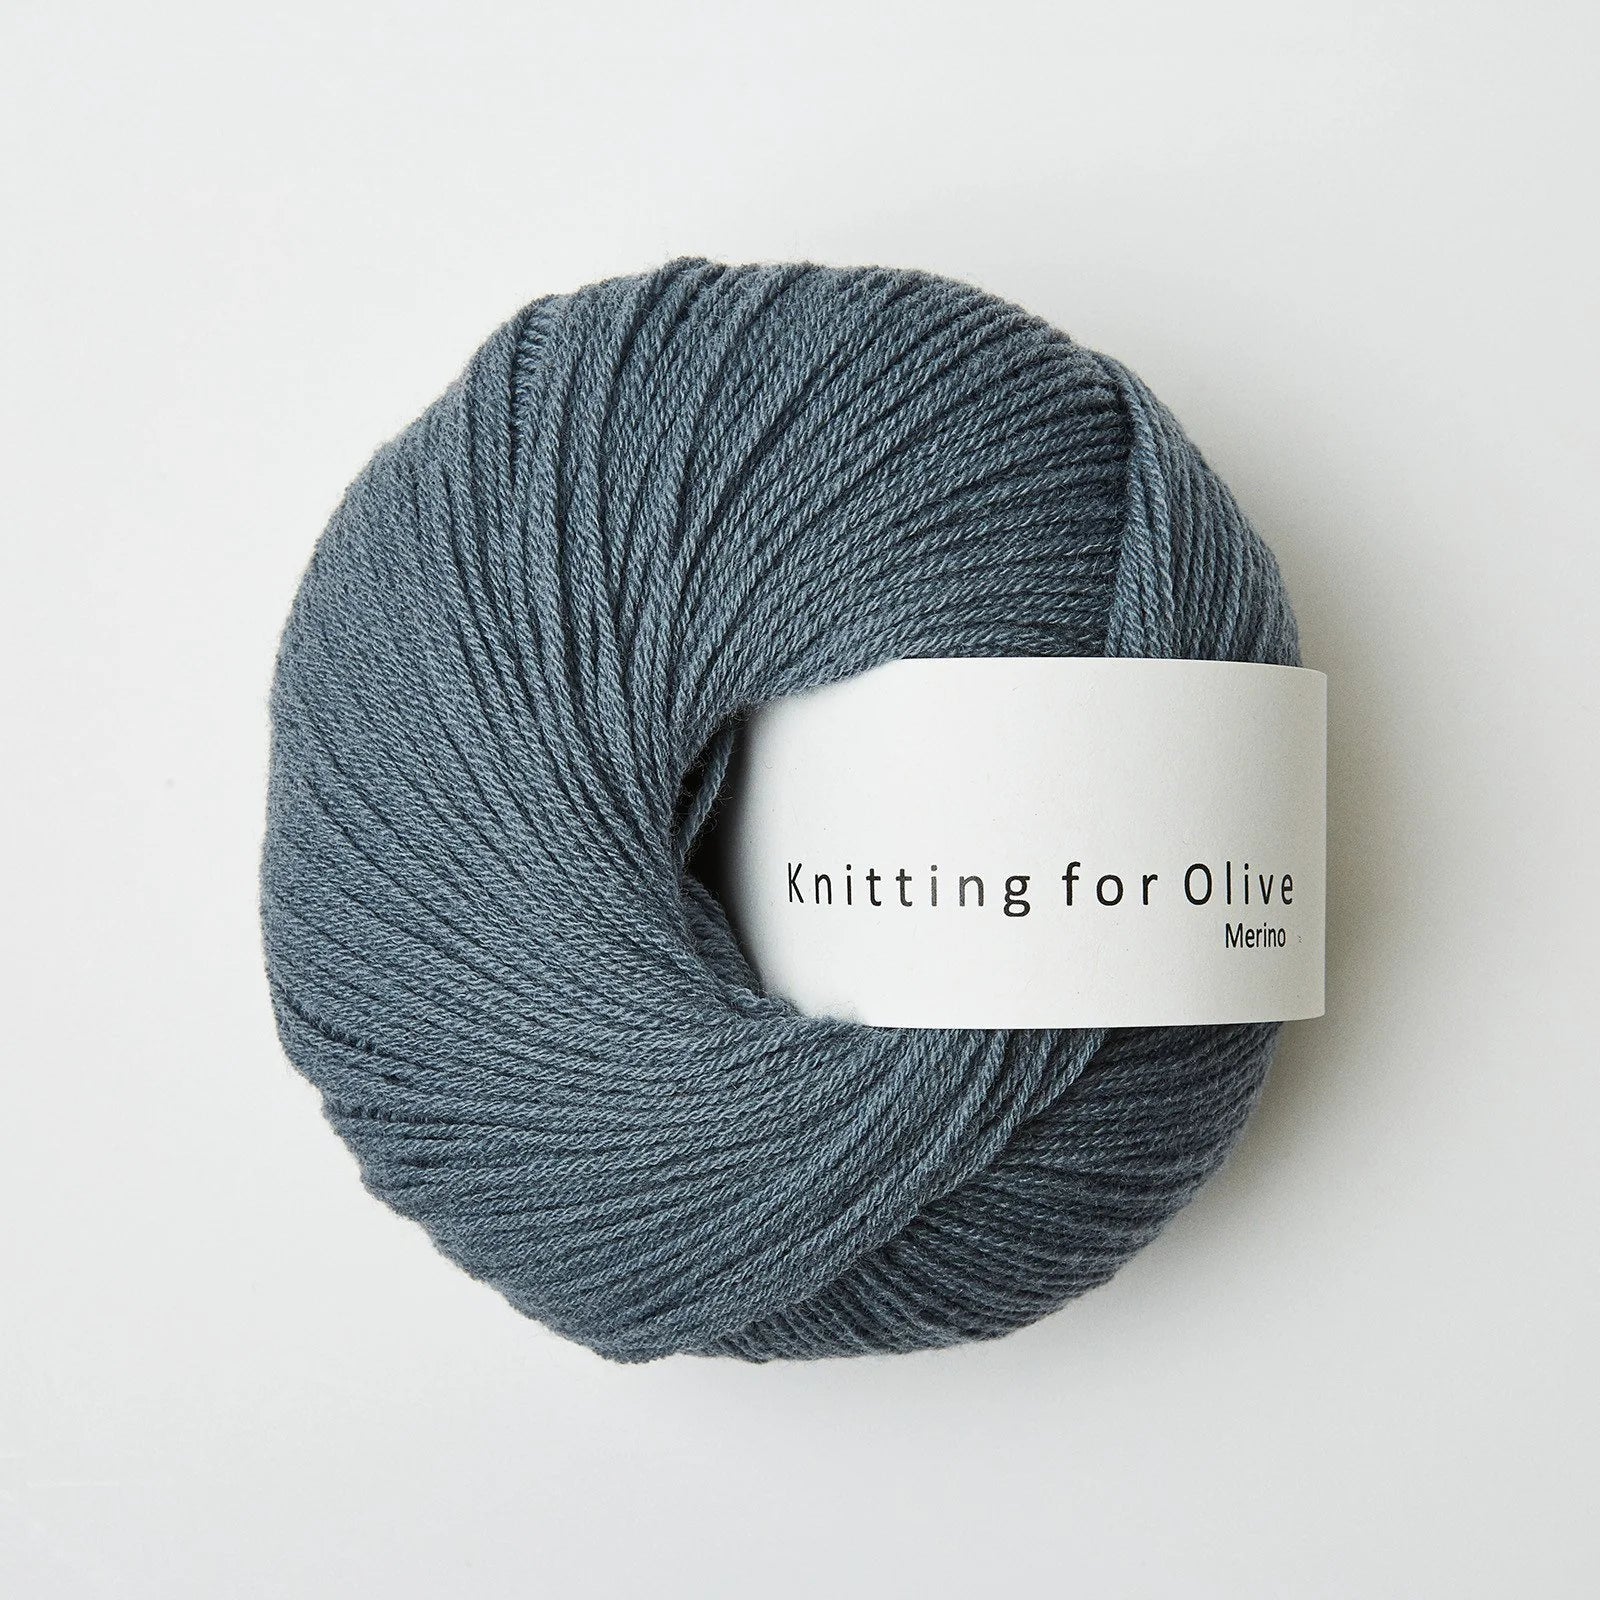 Knitting for Olive Merino - Knitting for Olive - Dusty Petroleum Blue - The Little Yarn Store